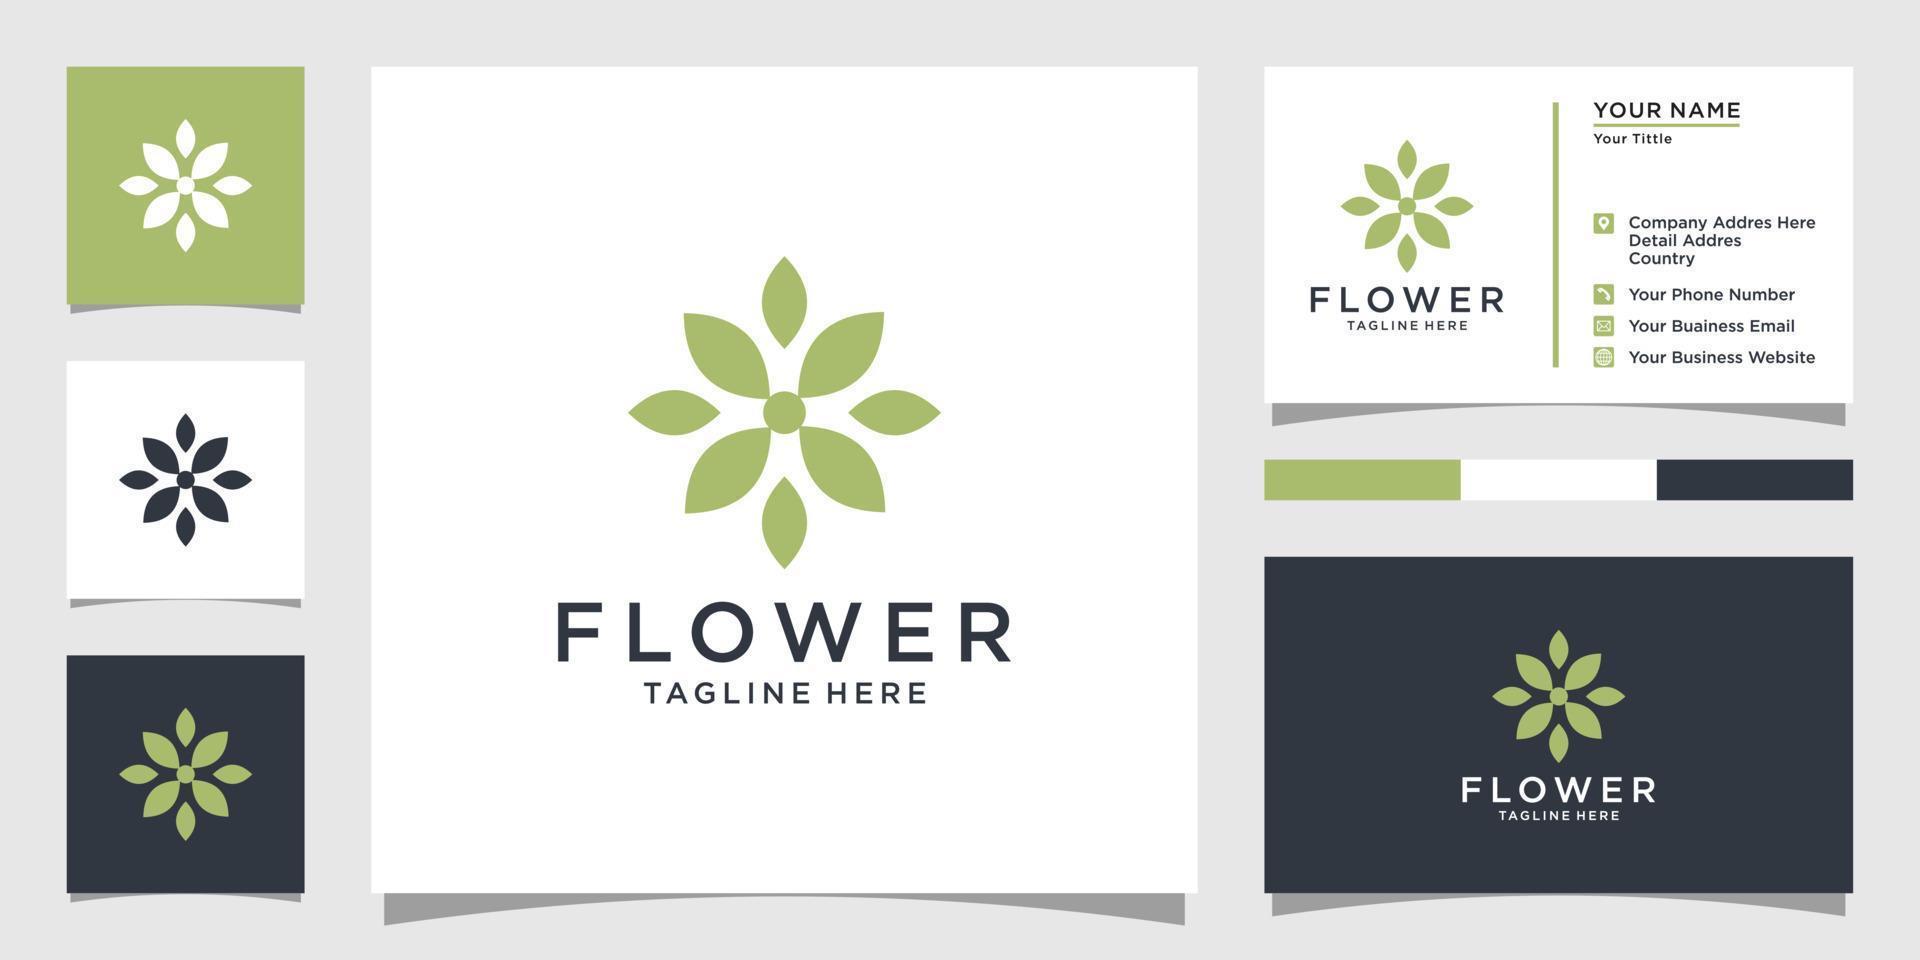 Blumen-Logo-Vektor-Design-Vorlage mit Visitenkarten-Design. vektor